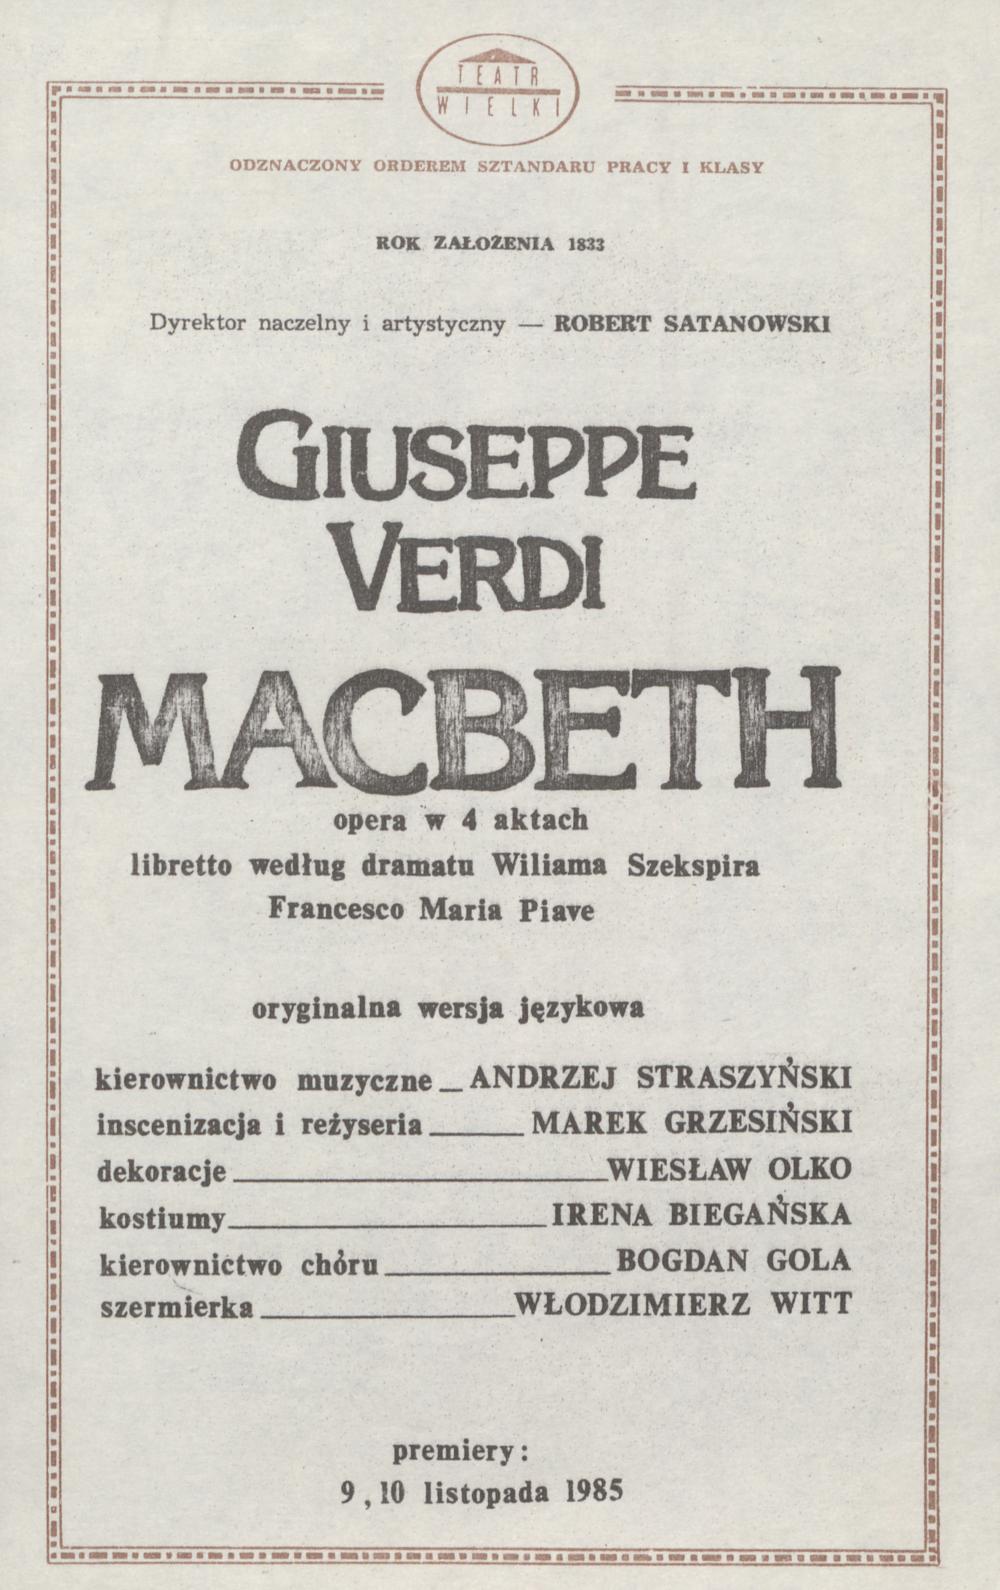 Wkładka obsadowa. „Macbeth” Giuseppe Verdi 21-01-1986